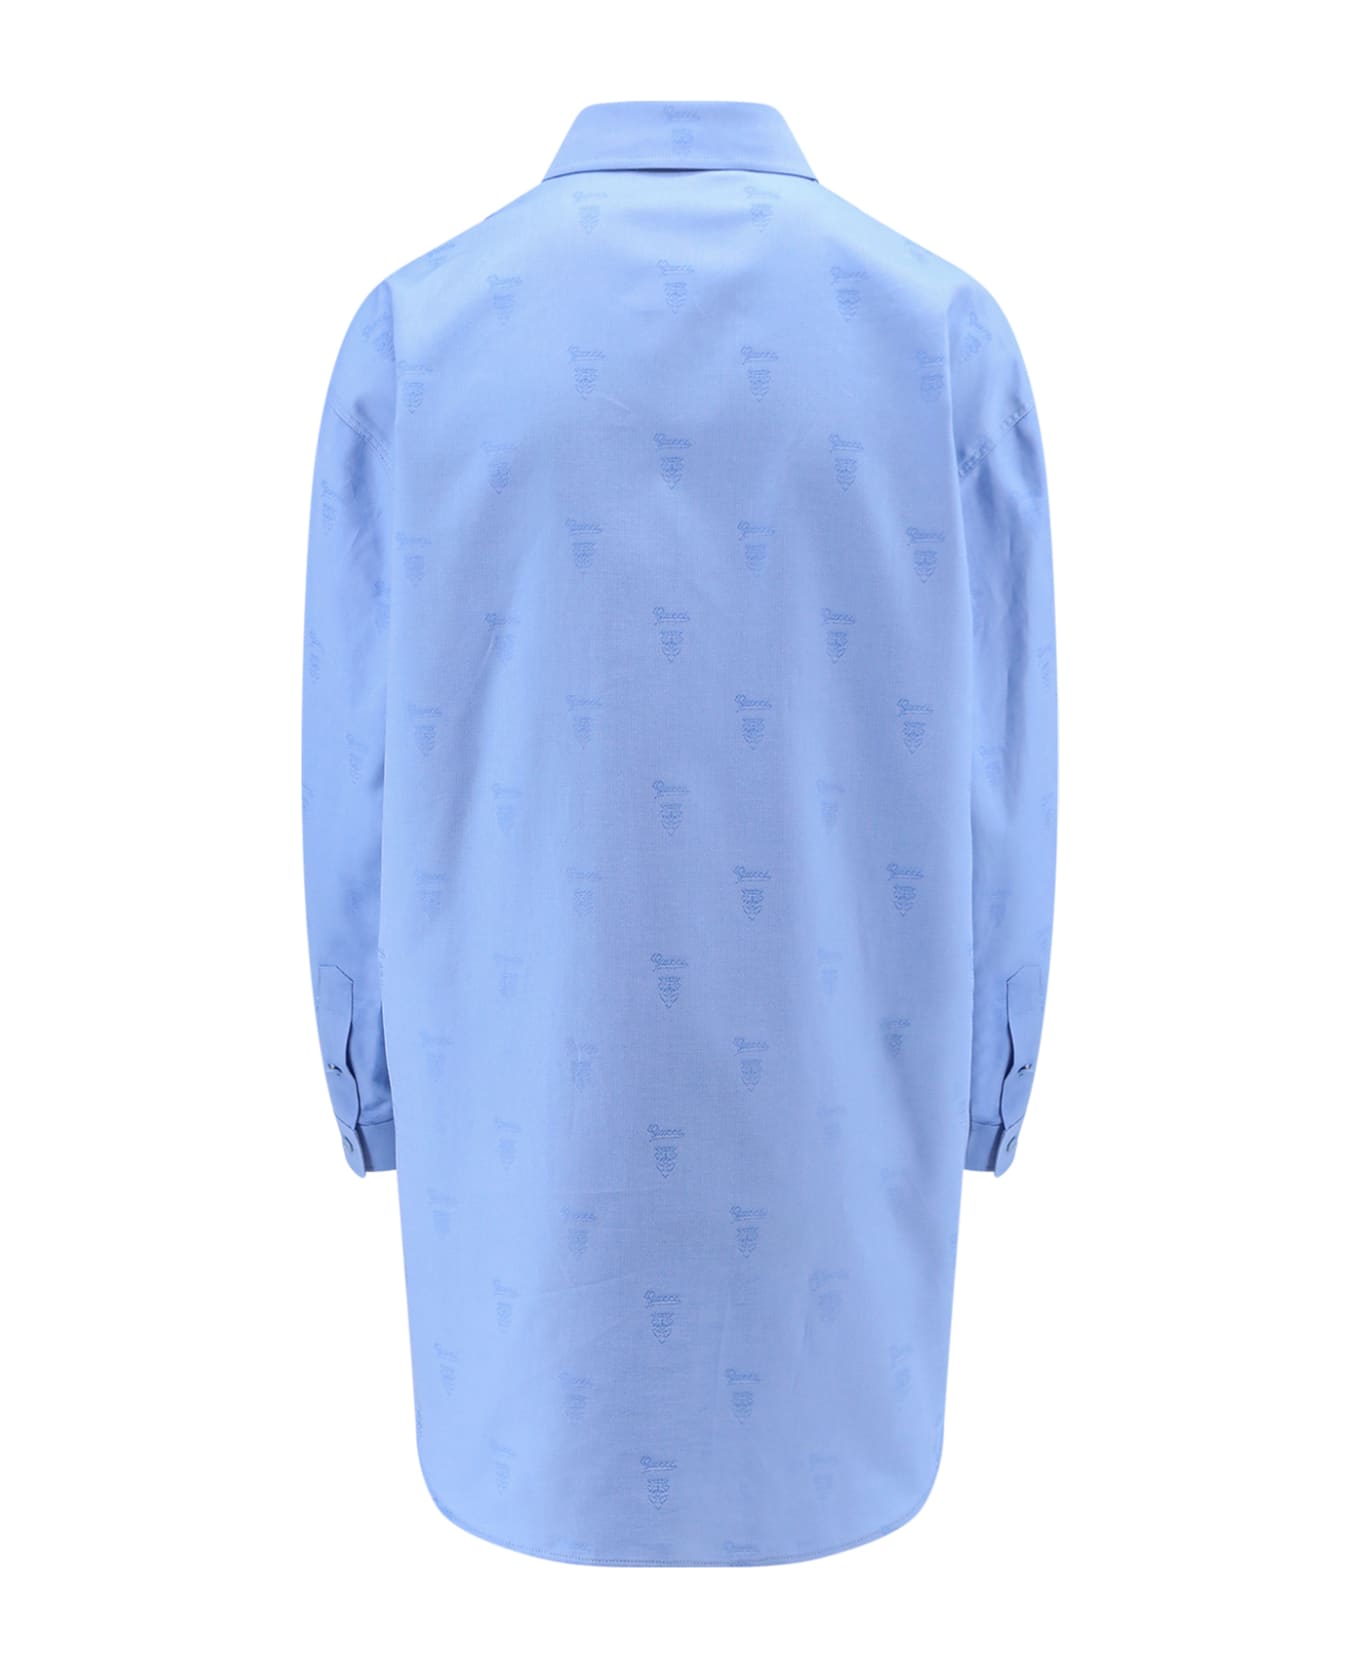 Gucci Shirt - Blue